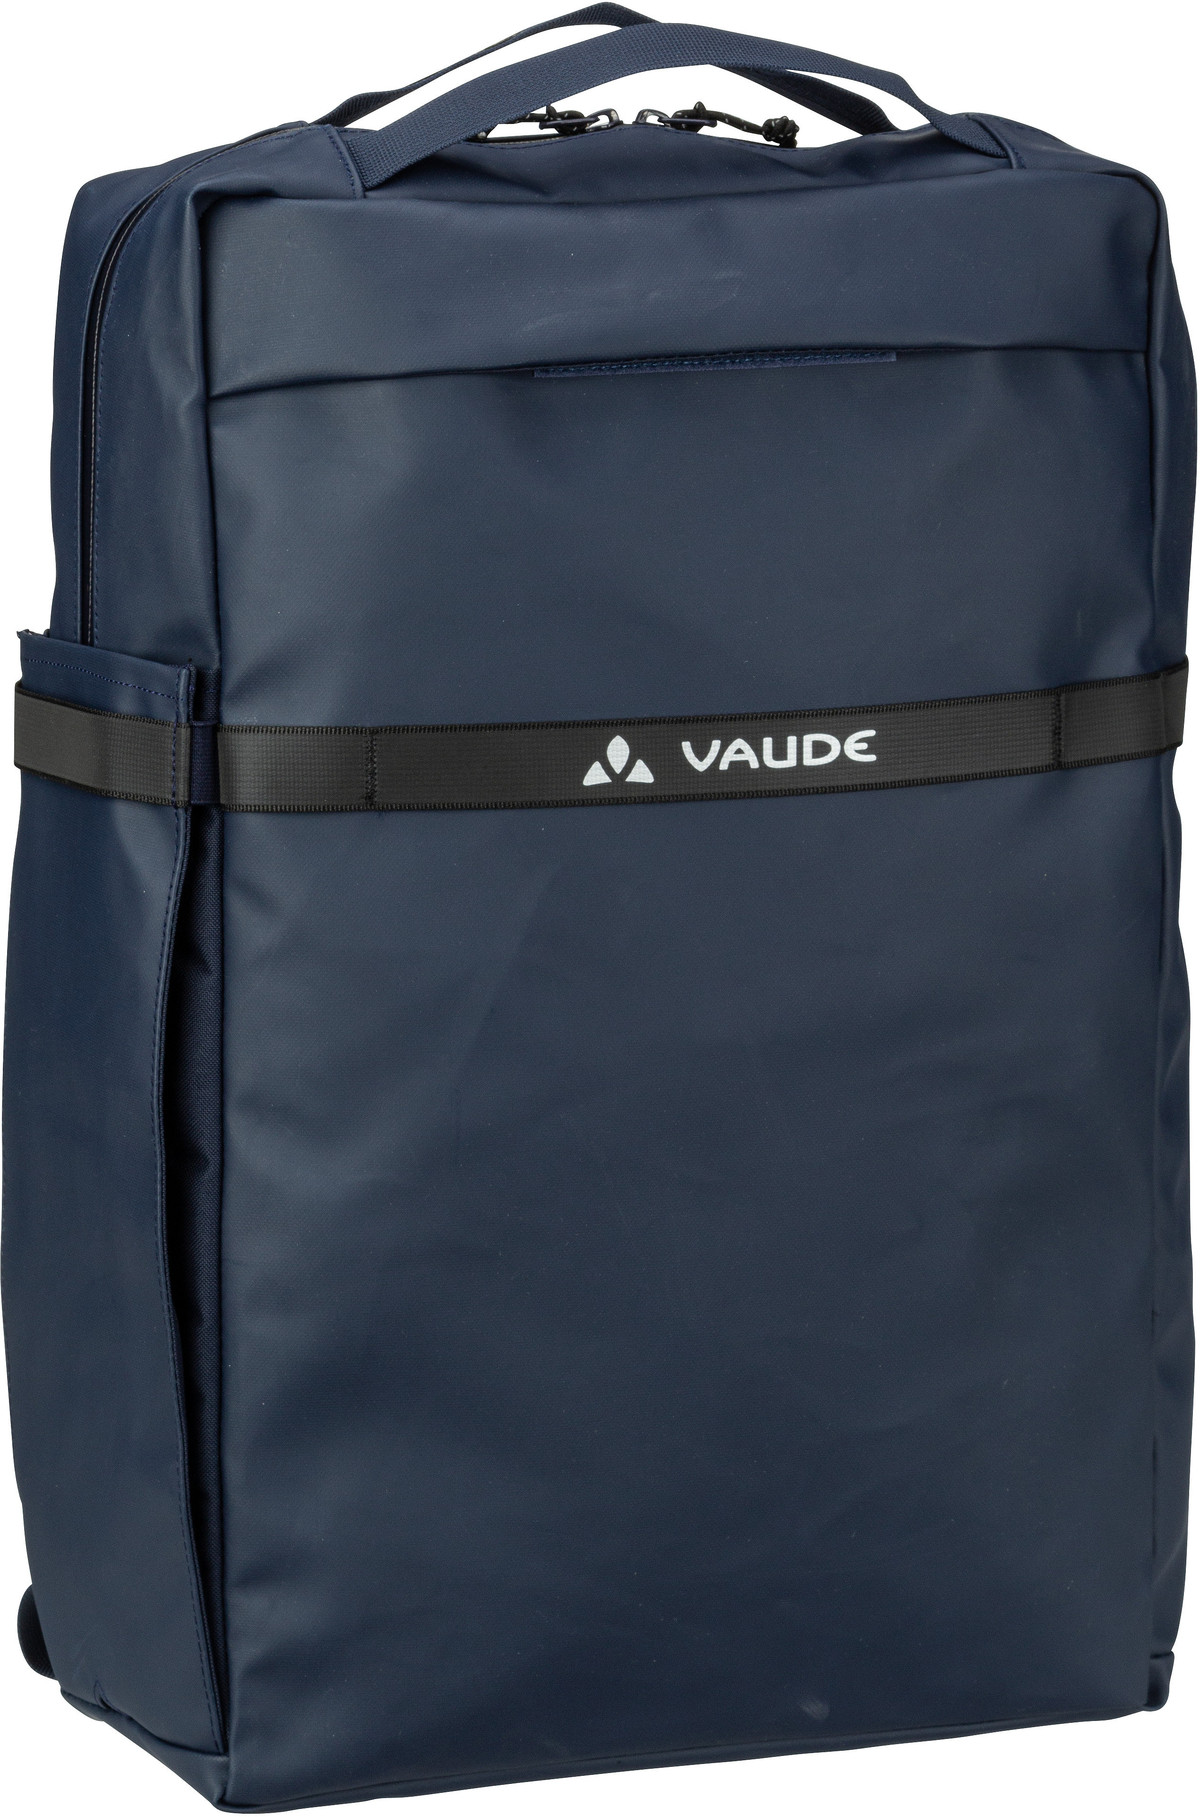 Vaude Mineo Transformer Backpack 20 - Eclipse